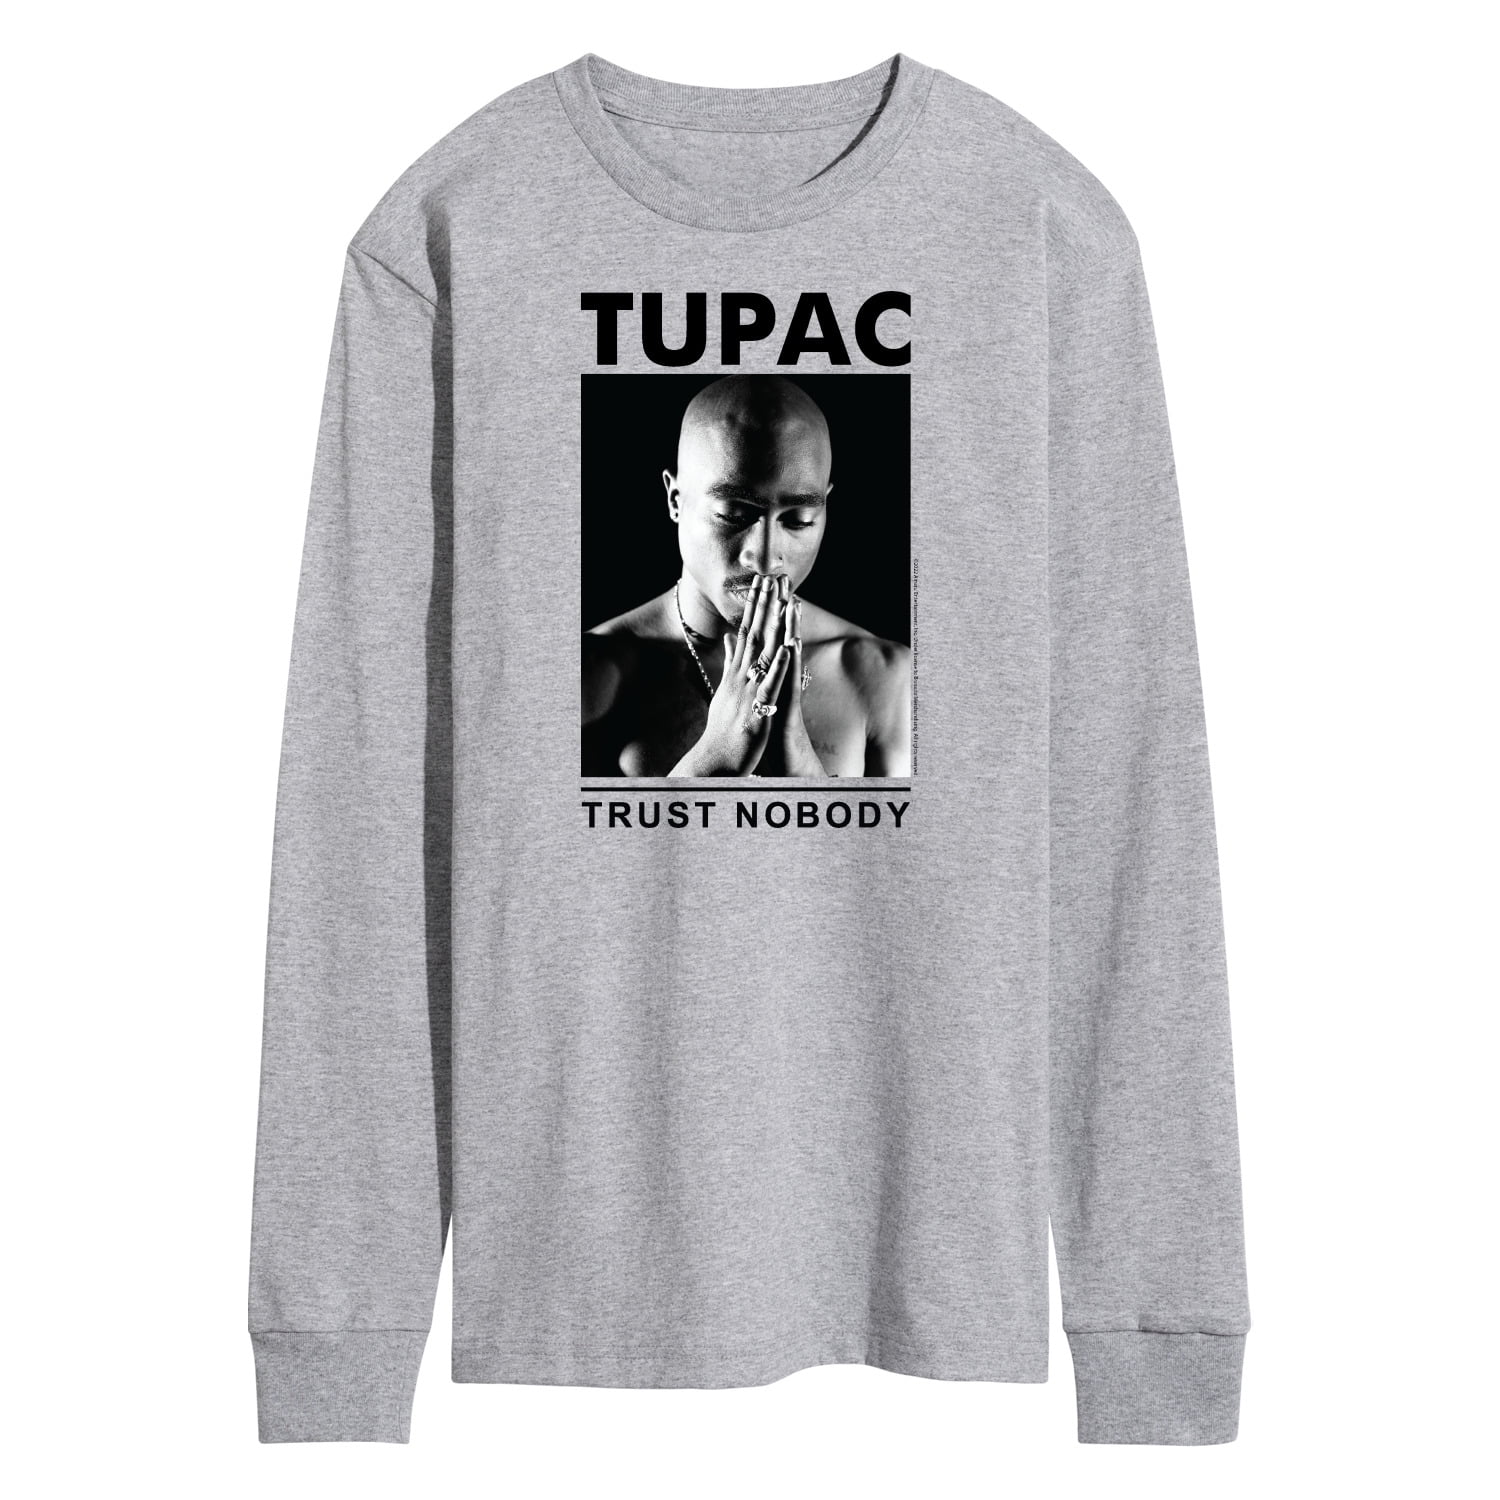 Tupac - Trust Nobody - Men's Long Sleeve T-Shirt